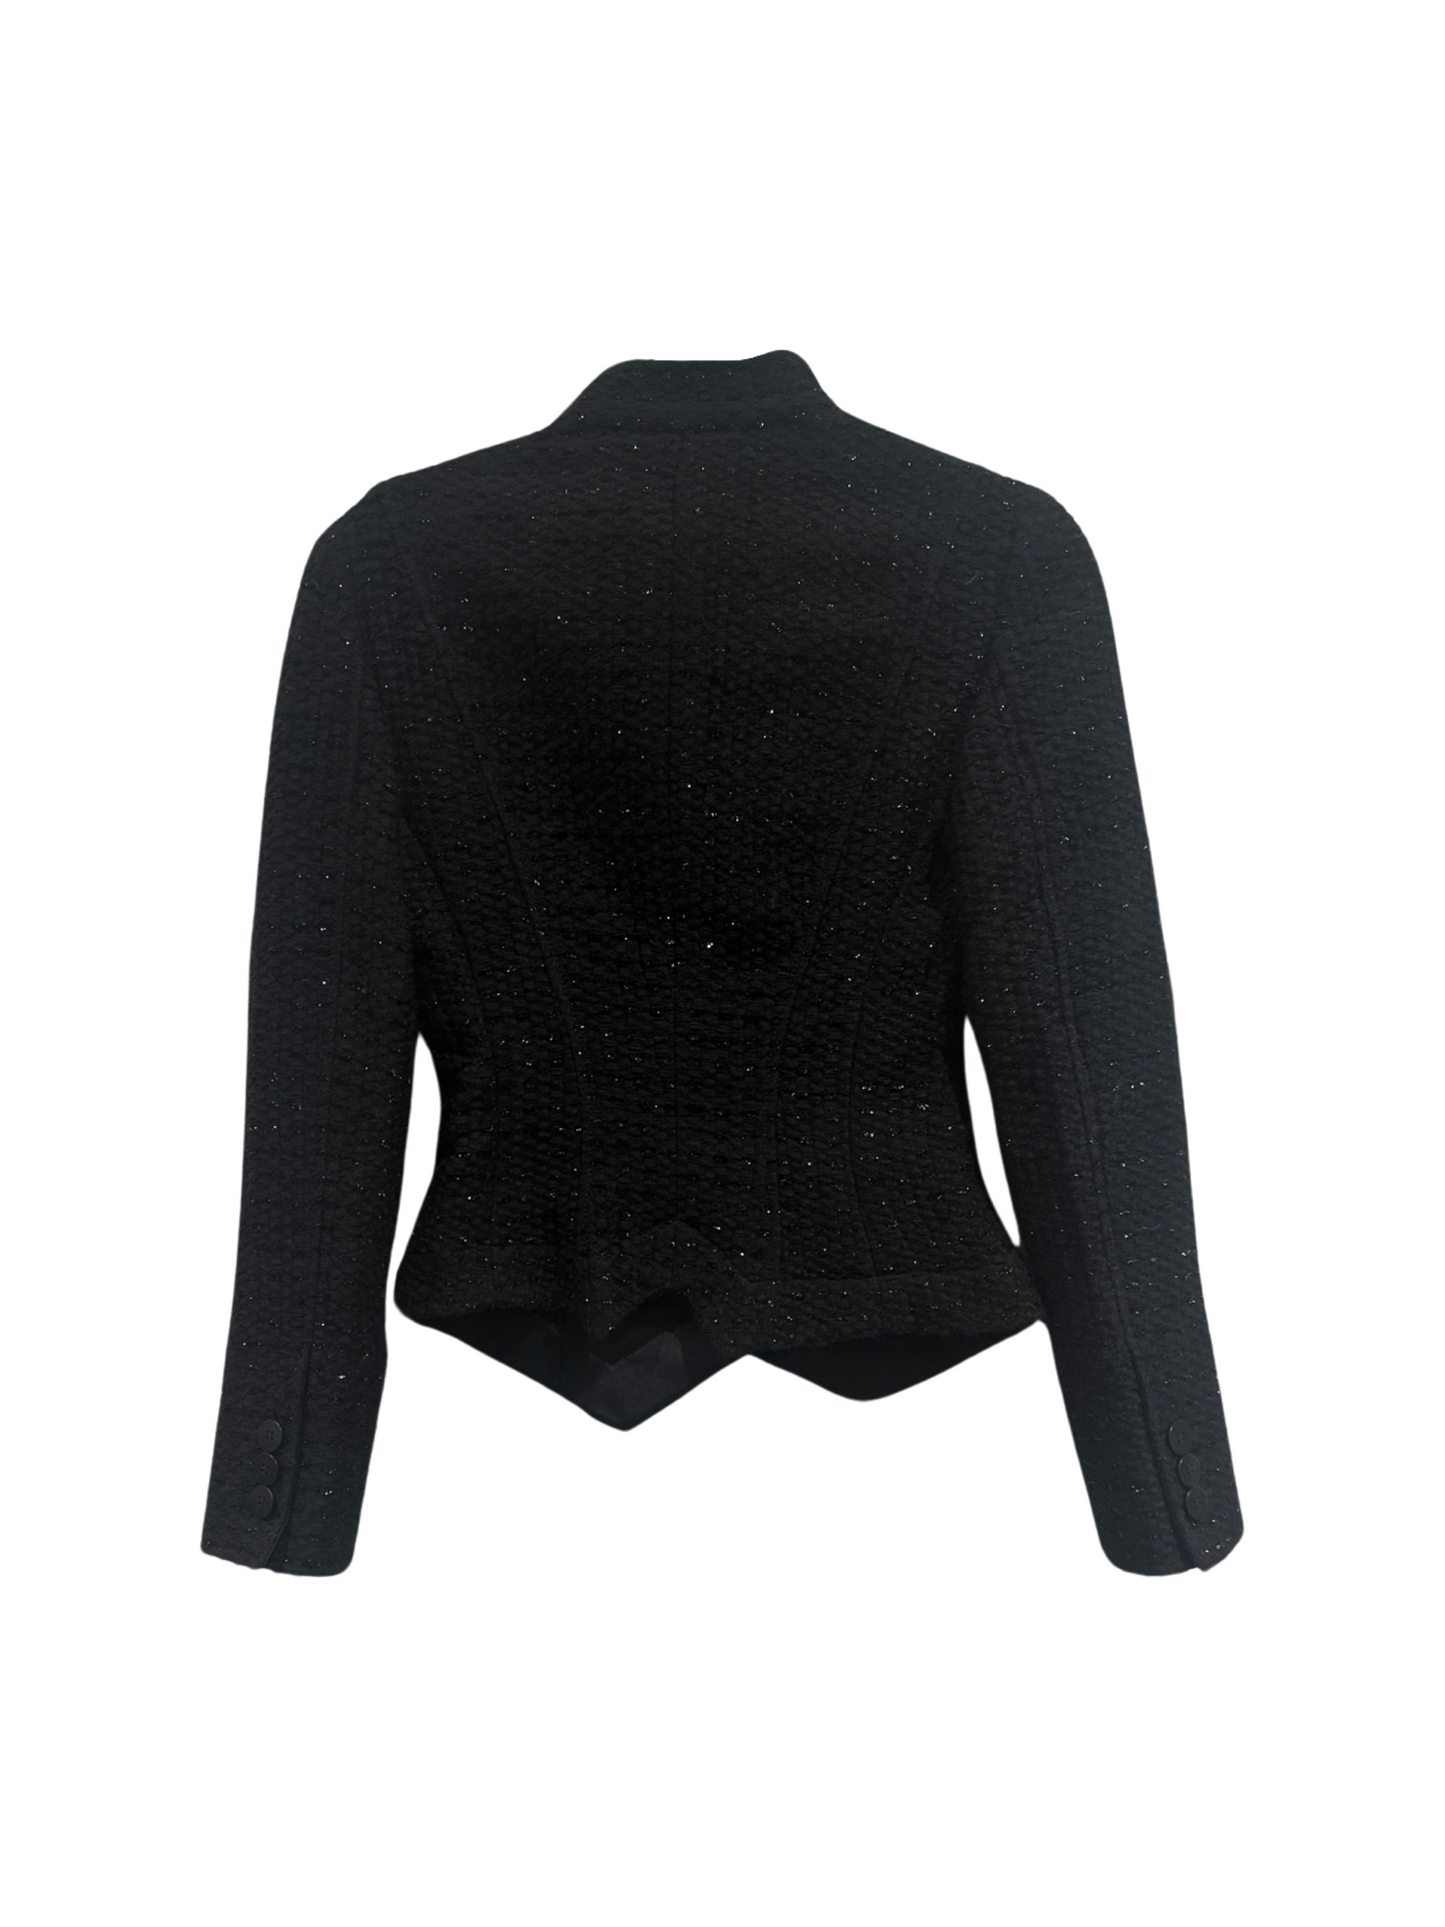 Armani Collezioni Tweed Evening Black Jacket S4